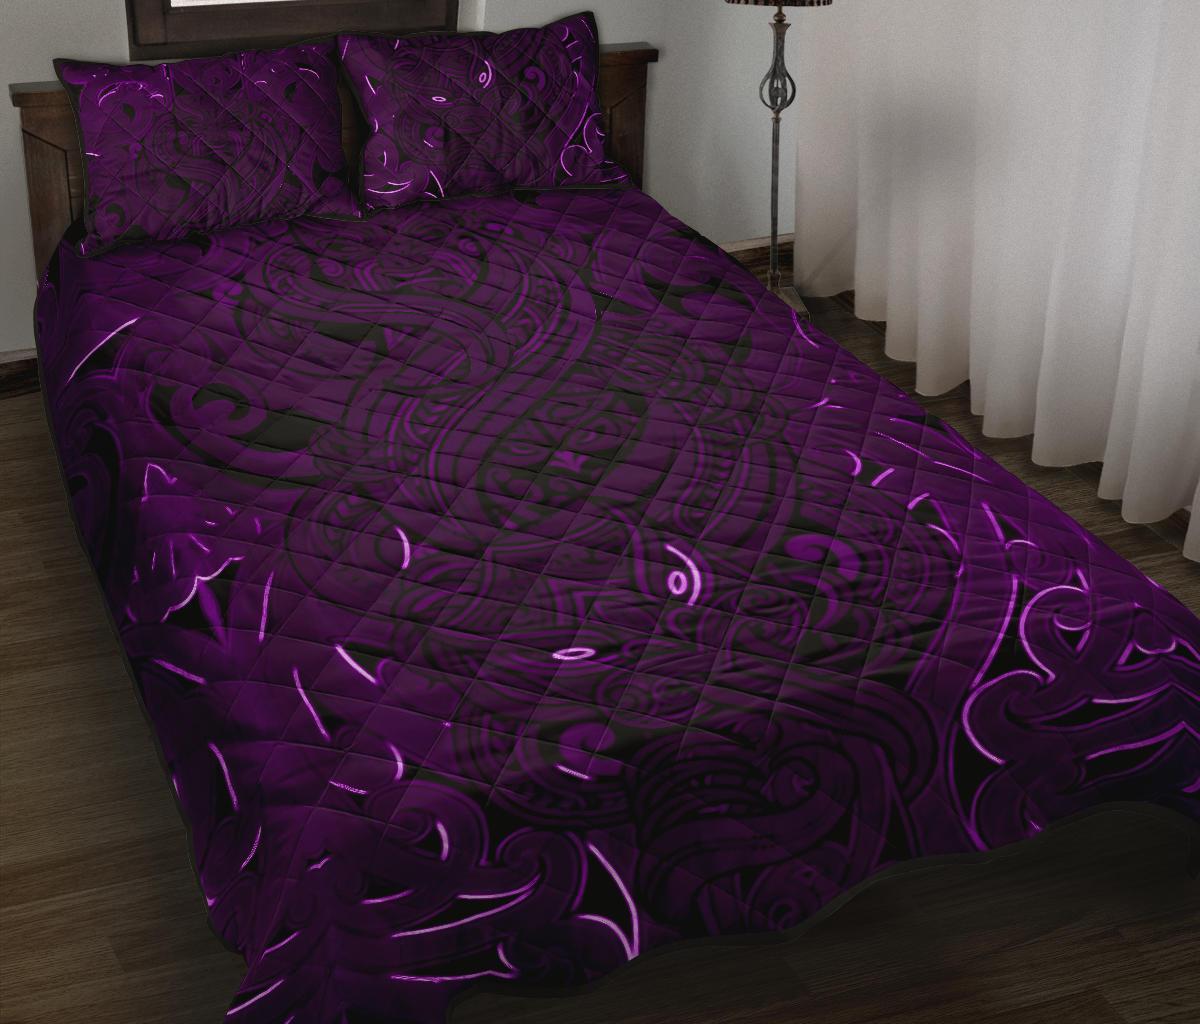 New Zealand Quilt Bed Set, Maori Gods Quilt And Pillow Cover Tumatauenga (God Of War) - Purple Purple - Polynesian Pride